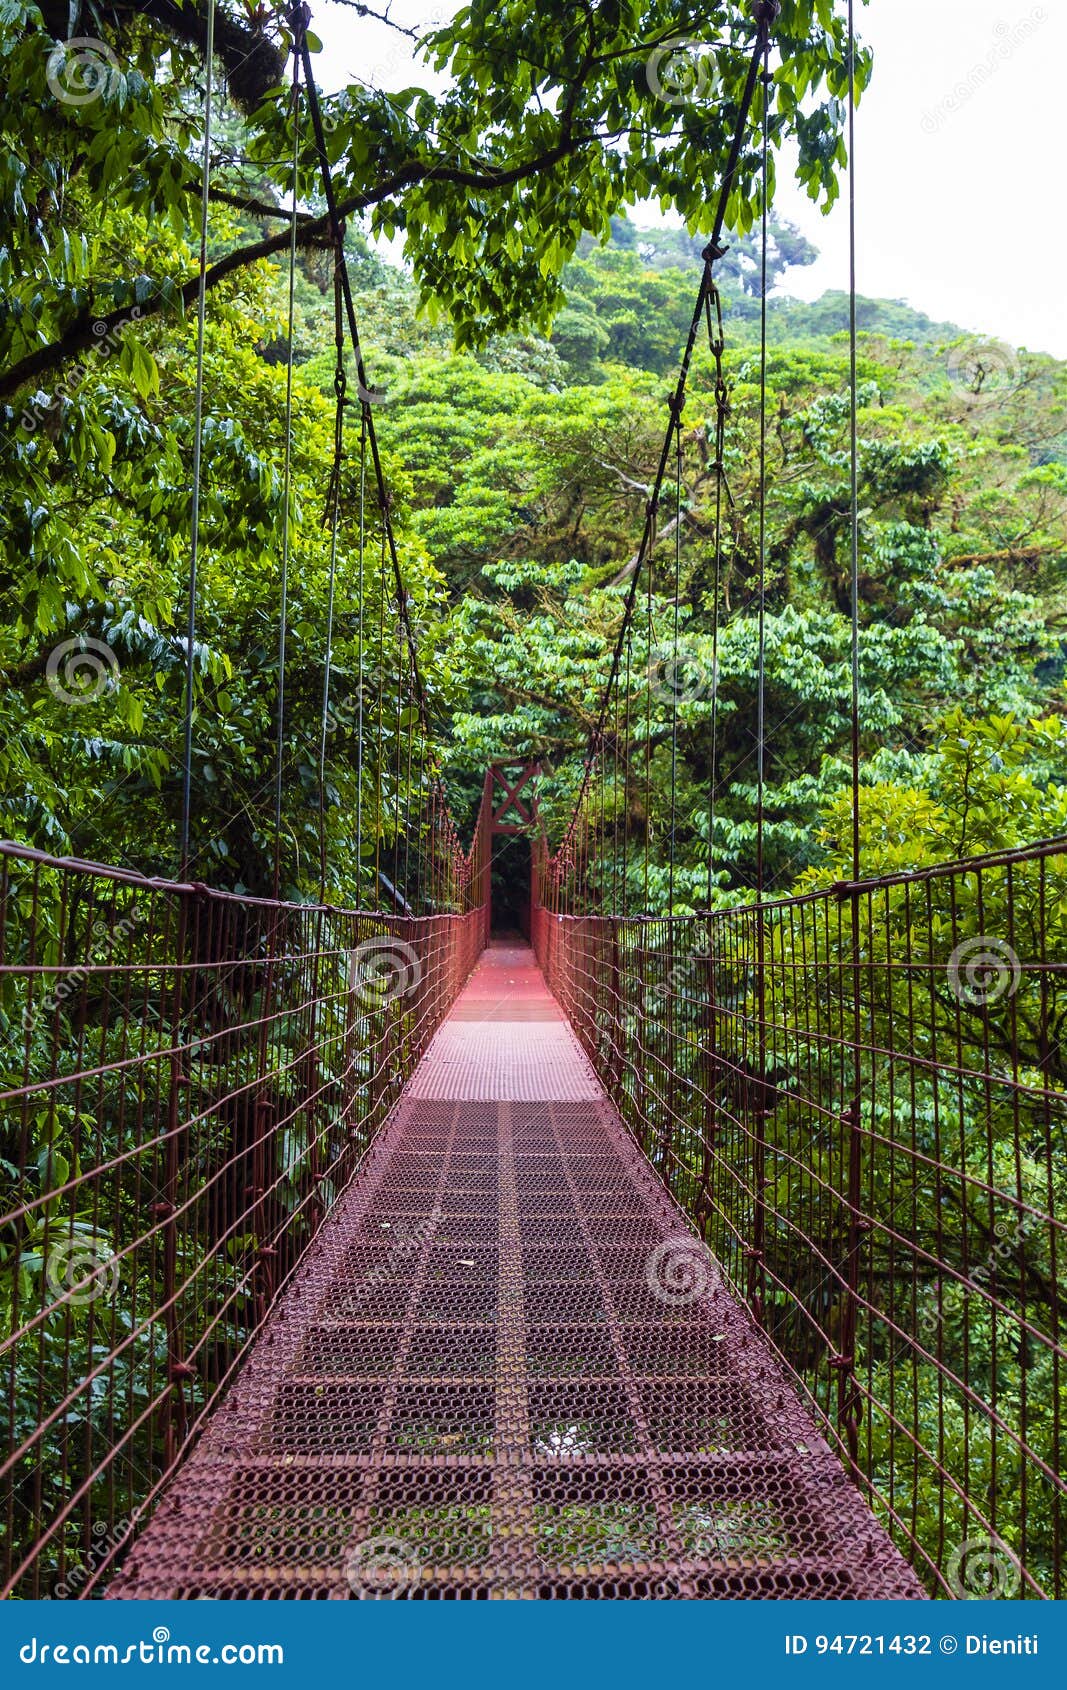 rope bridge - monteverde cloud forest reserve